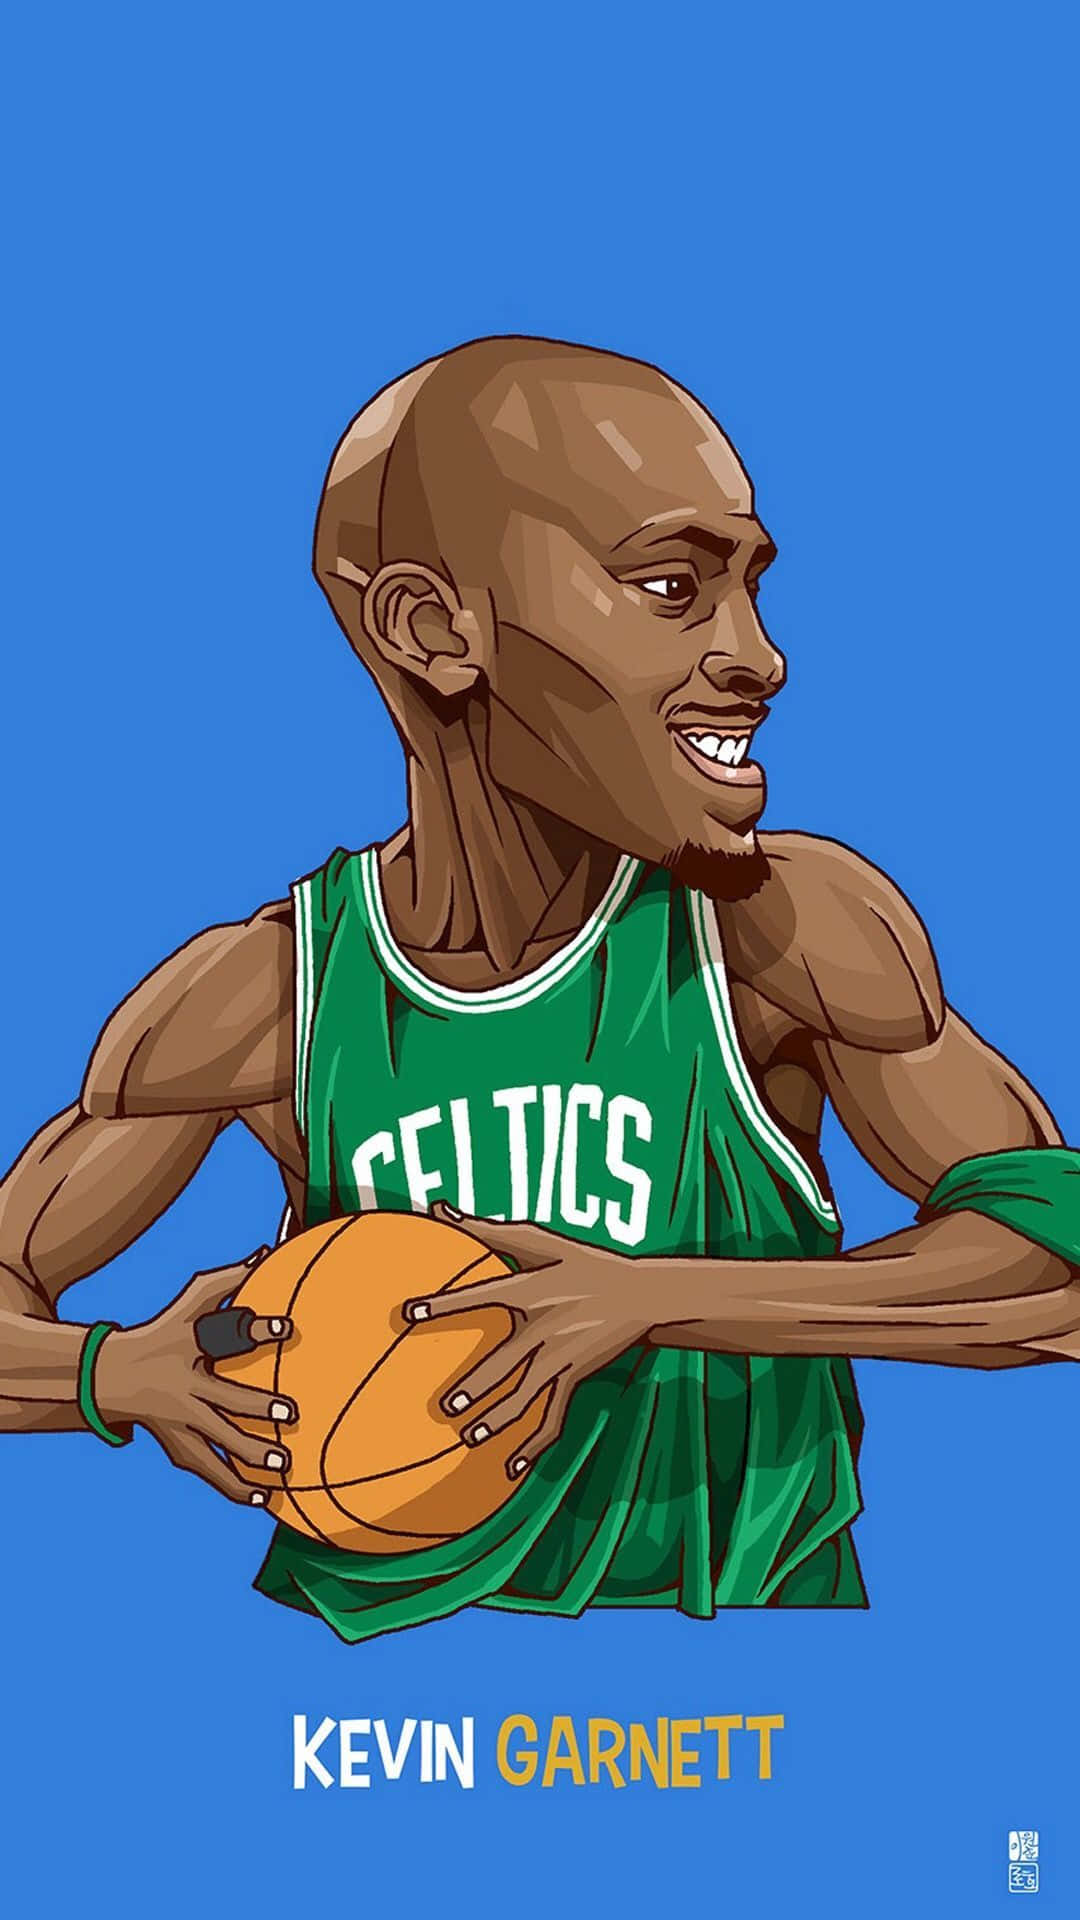 Kevingarnett - Basketballspieler Von Kevin Garnett Wallpaper